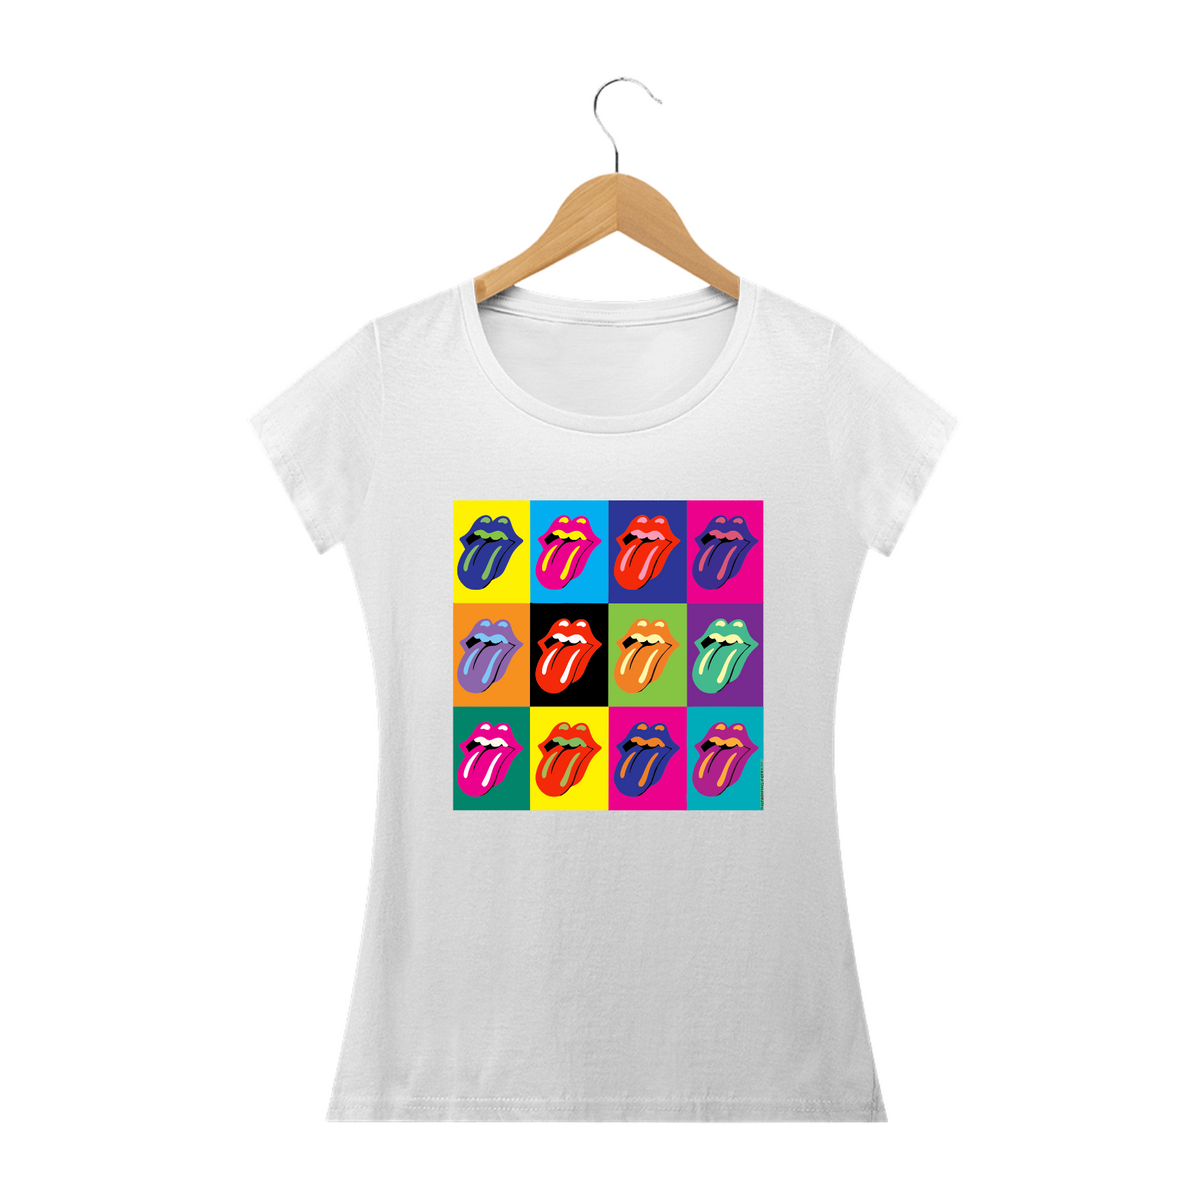 Nome do produto: ROLLING STONES POP ART - Camiseta Feminina Personalizada com Estampa Pop Art